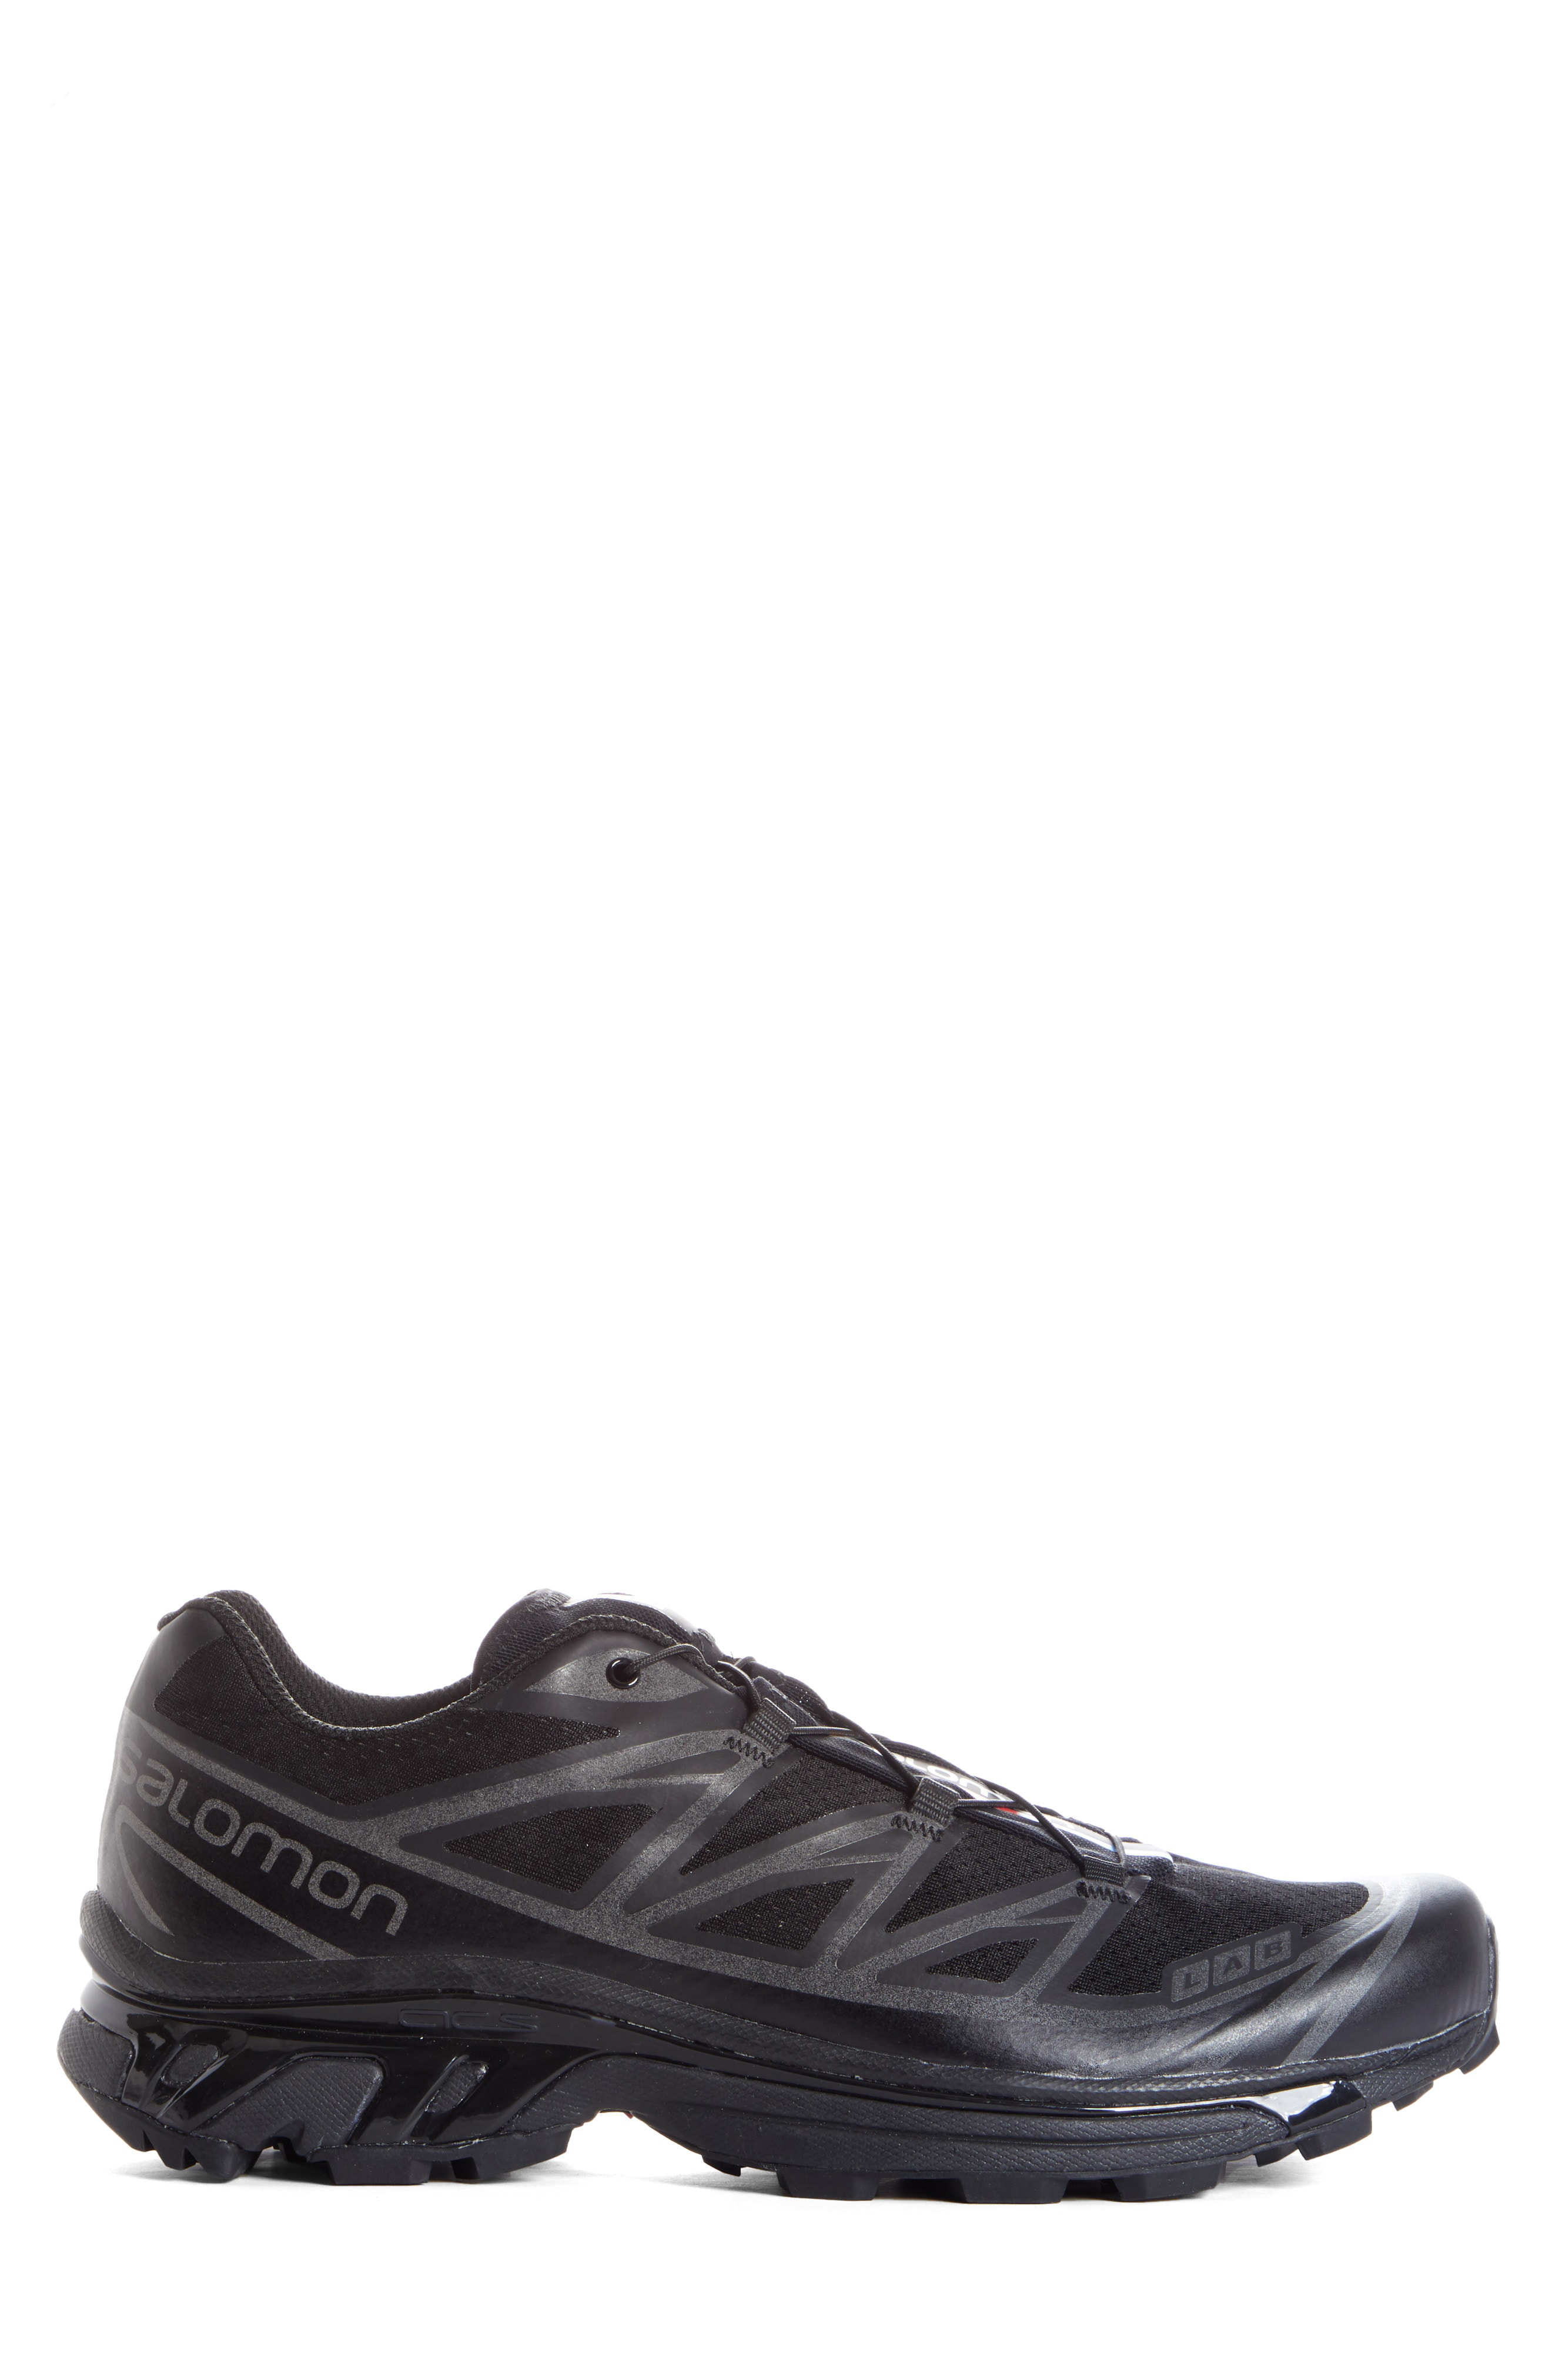 Salomon S/lab Xt-6 Softground Adv Ltd Sneaker In Black/ Black/ Phantom |  ModeSens